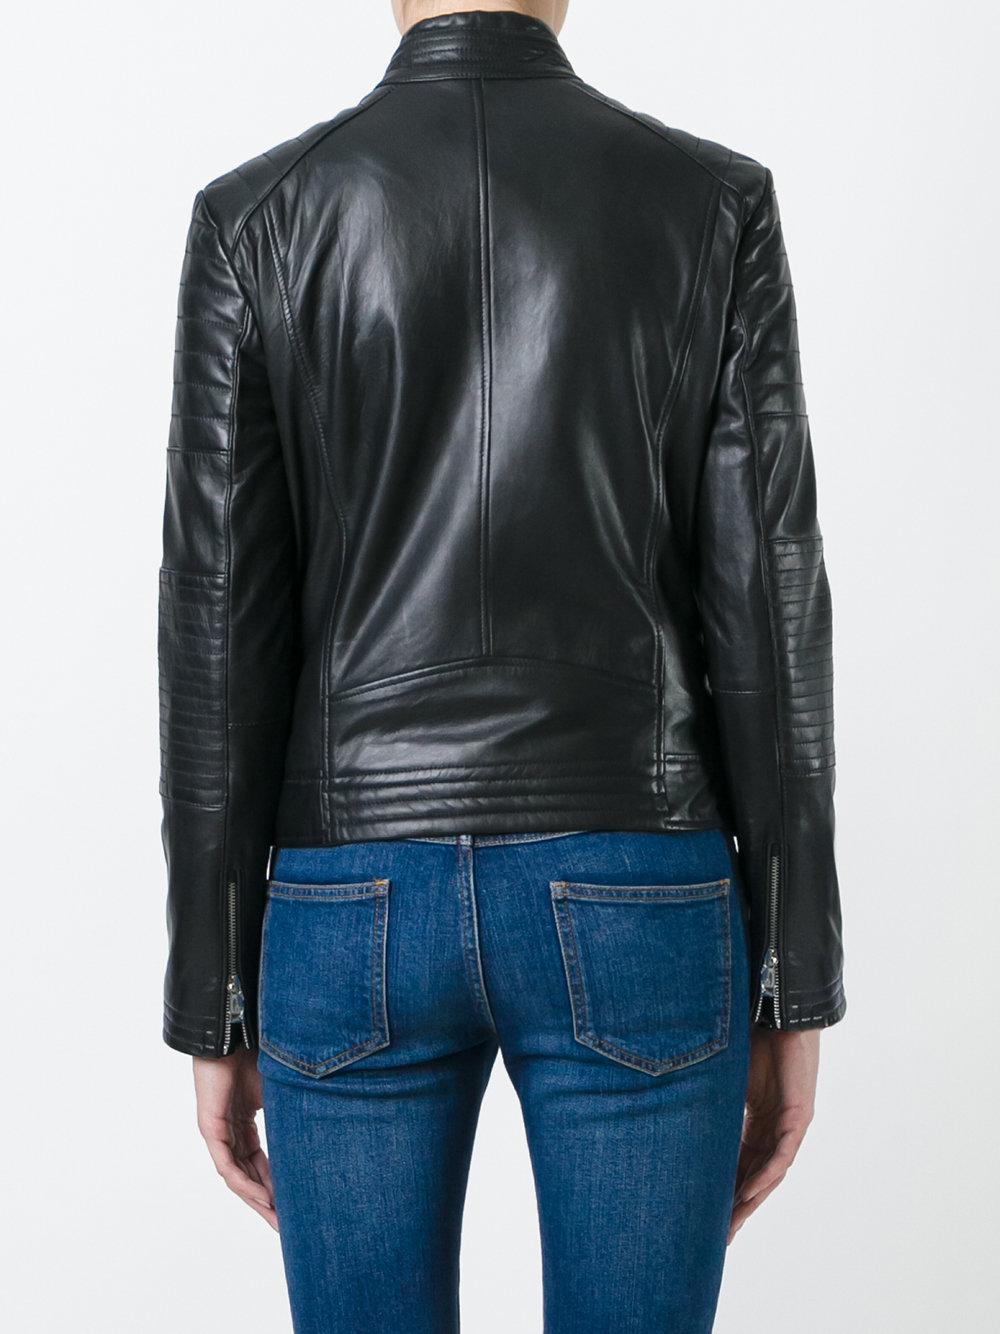 Polo Ralph Lauren Leather Zip Up Jacket in Black - Lyst